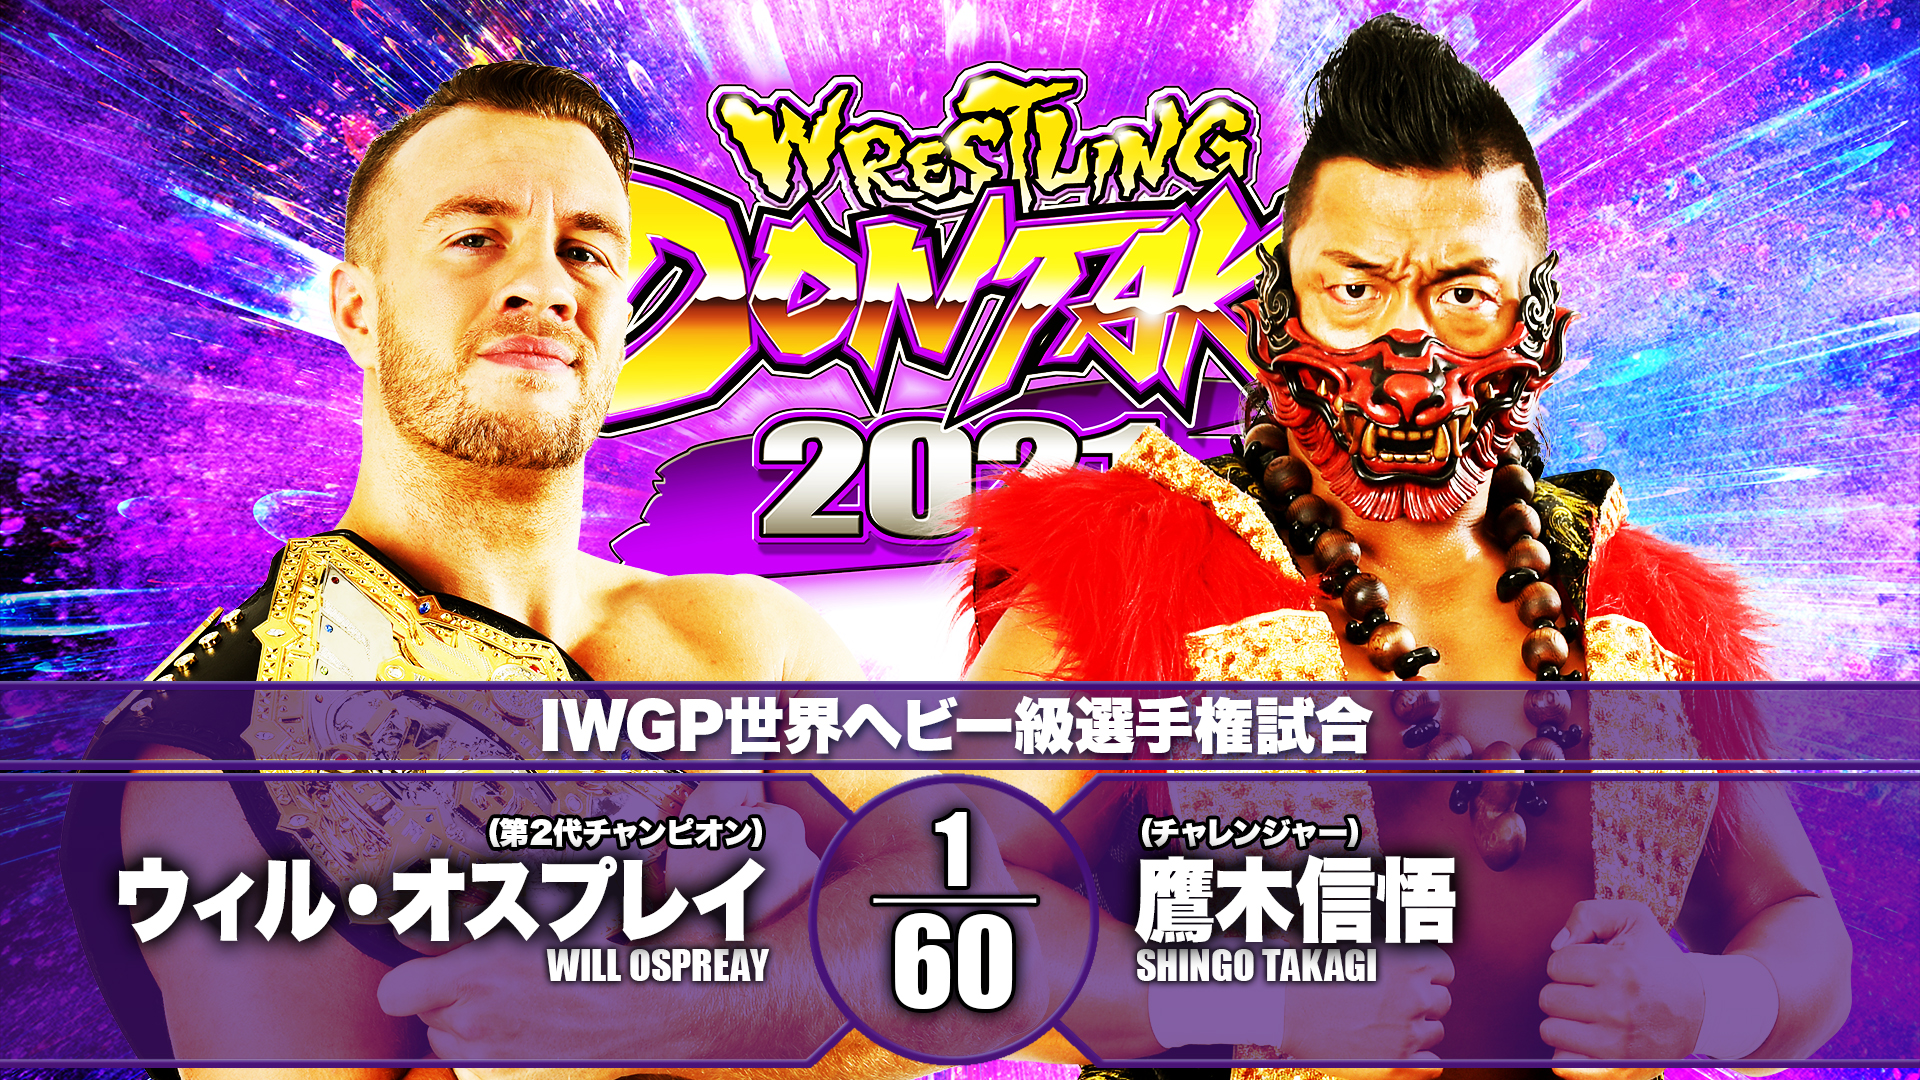 Main event: IWGP World Heavyweight Championship- Will Ospreay vs Shingo Tak...